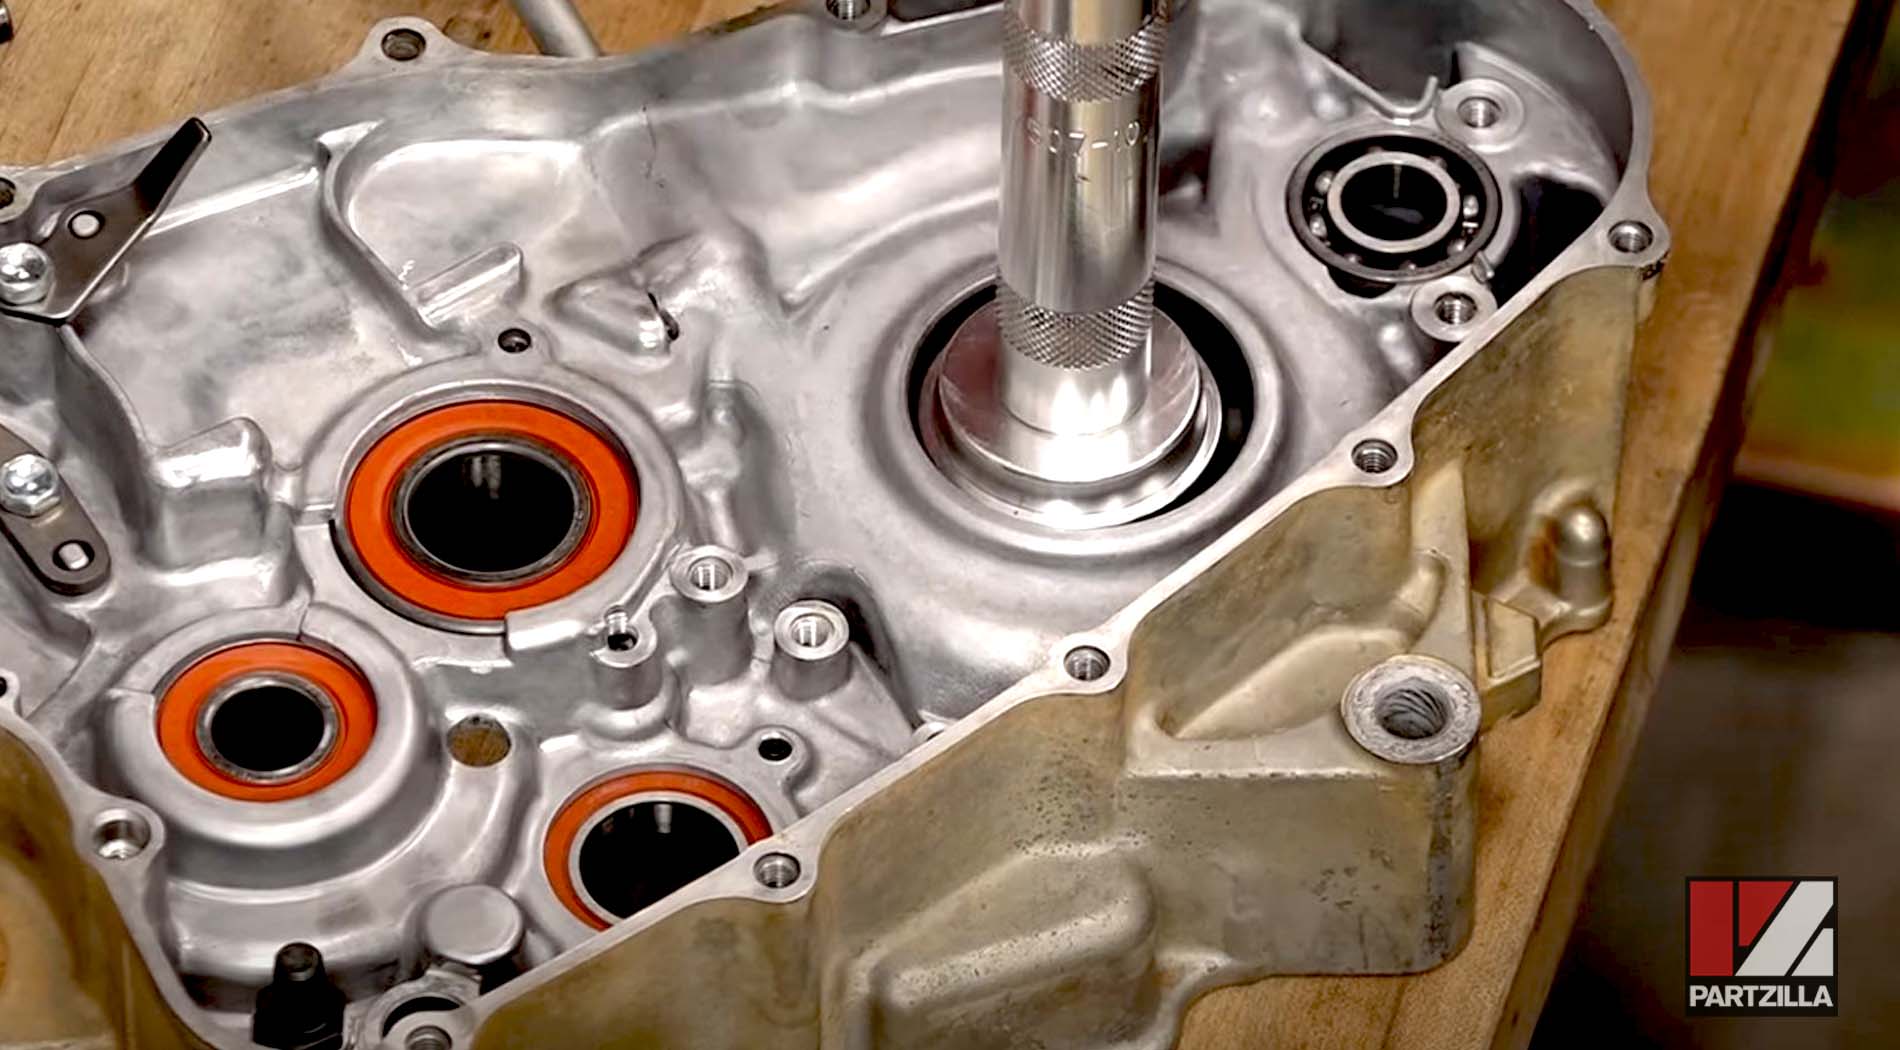 Honda motorcycle engine rebuild 